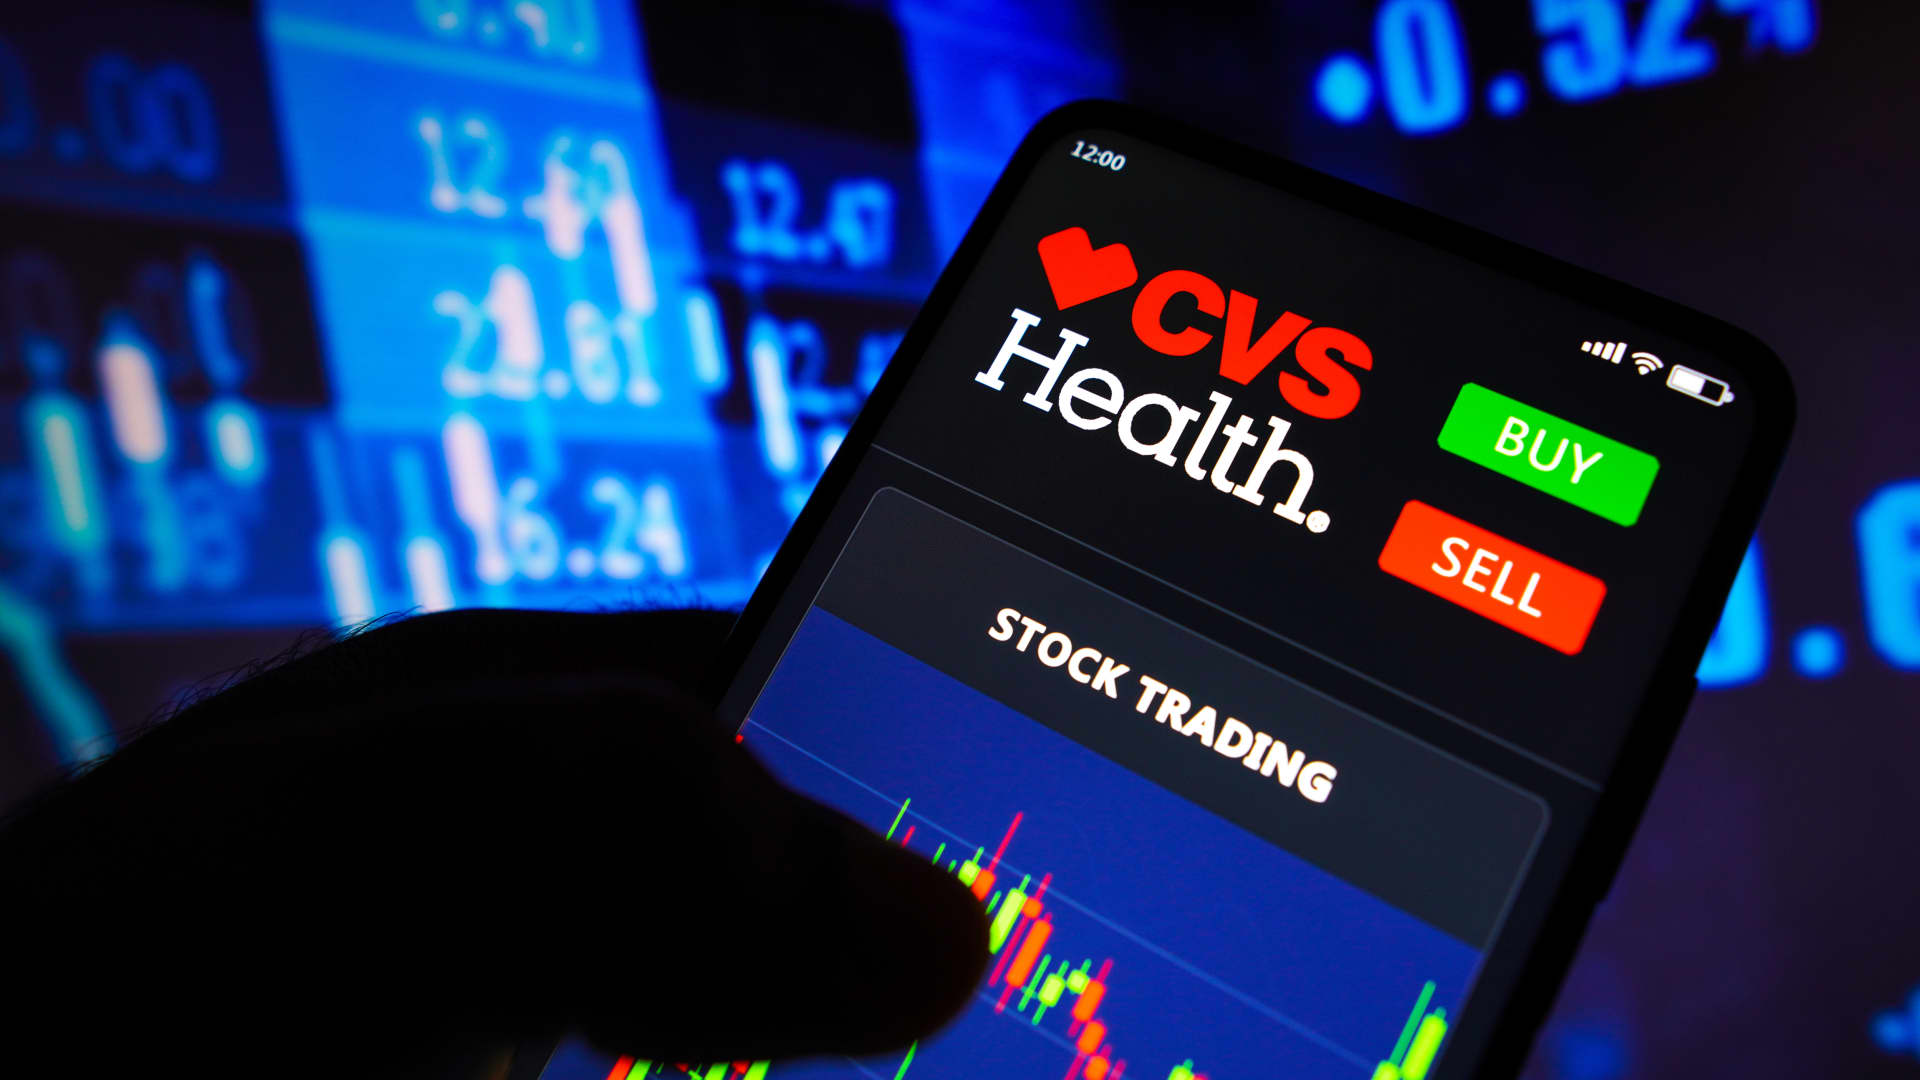 CVS Health reports Q3 earnings, opioid settlement